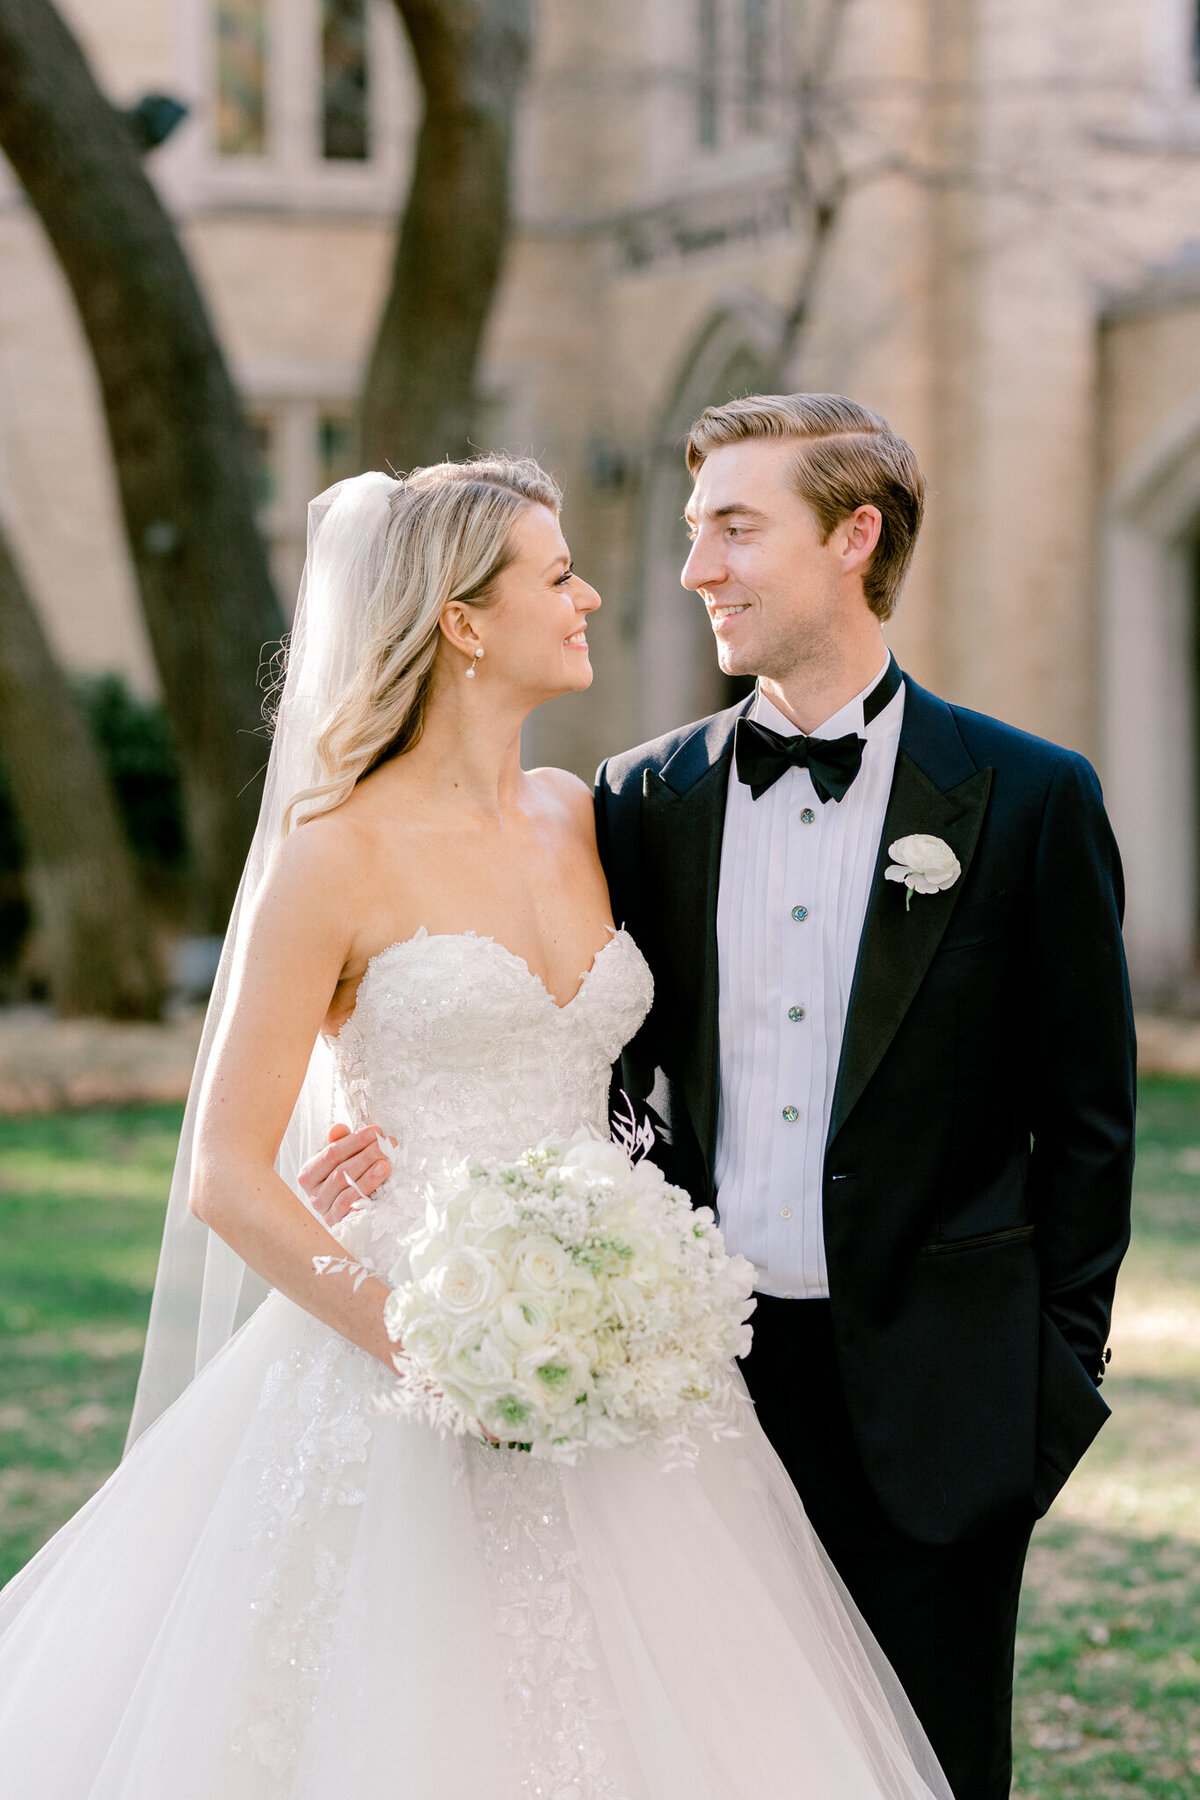 Shelby & Thomas's Wedding at HPUMC The Room on Main | Dallas Wedding Photographer | Sami Kathryn Photography-149